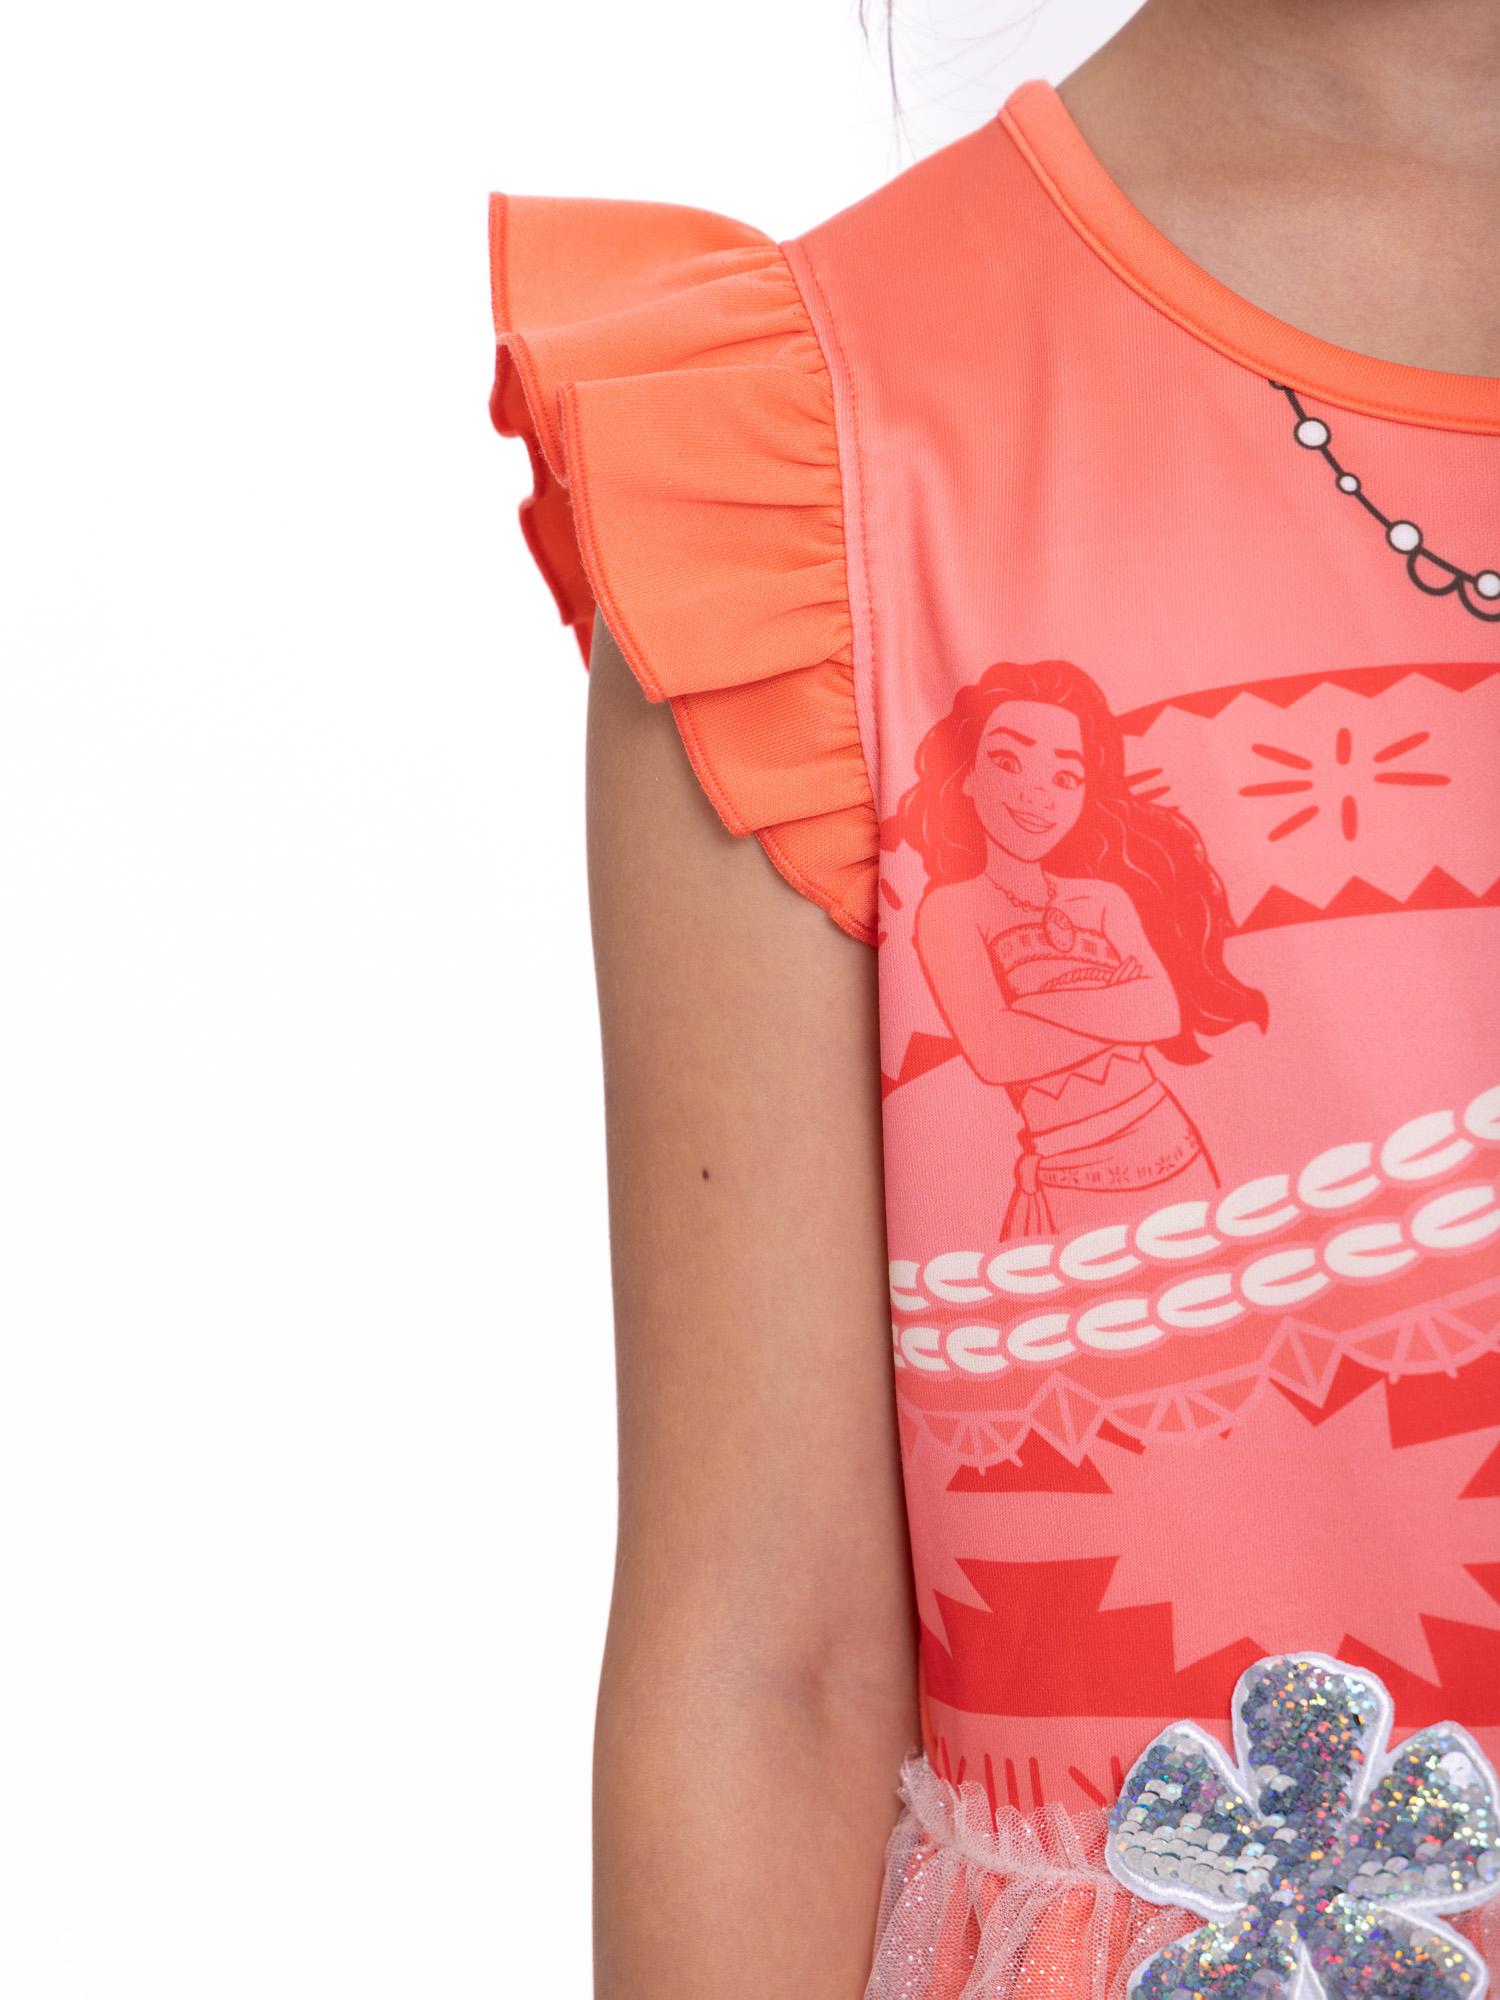 Disney Girls' Moana Princess Cosplay Dress, Sizes 4-16 - image 5 of 14